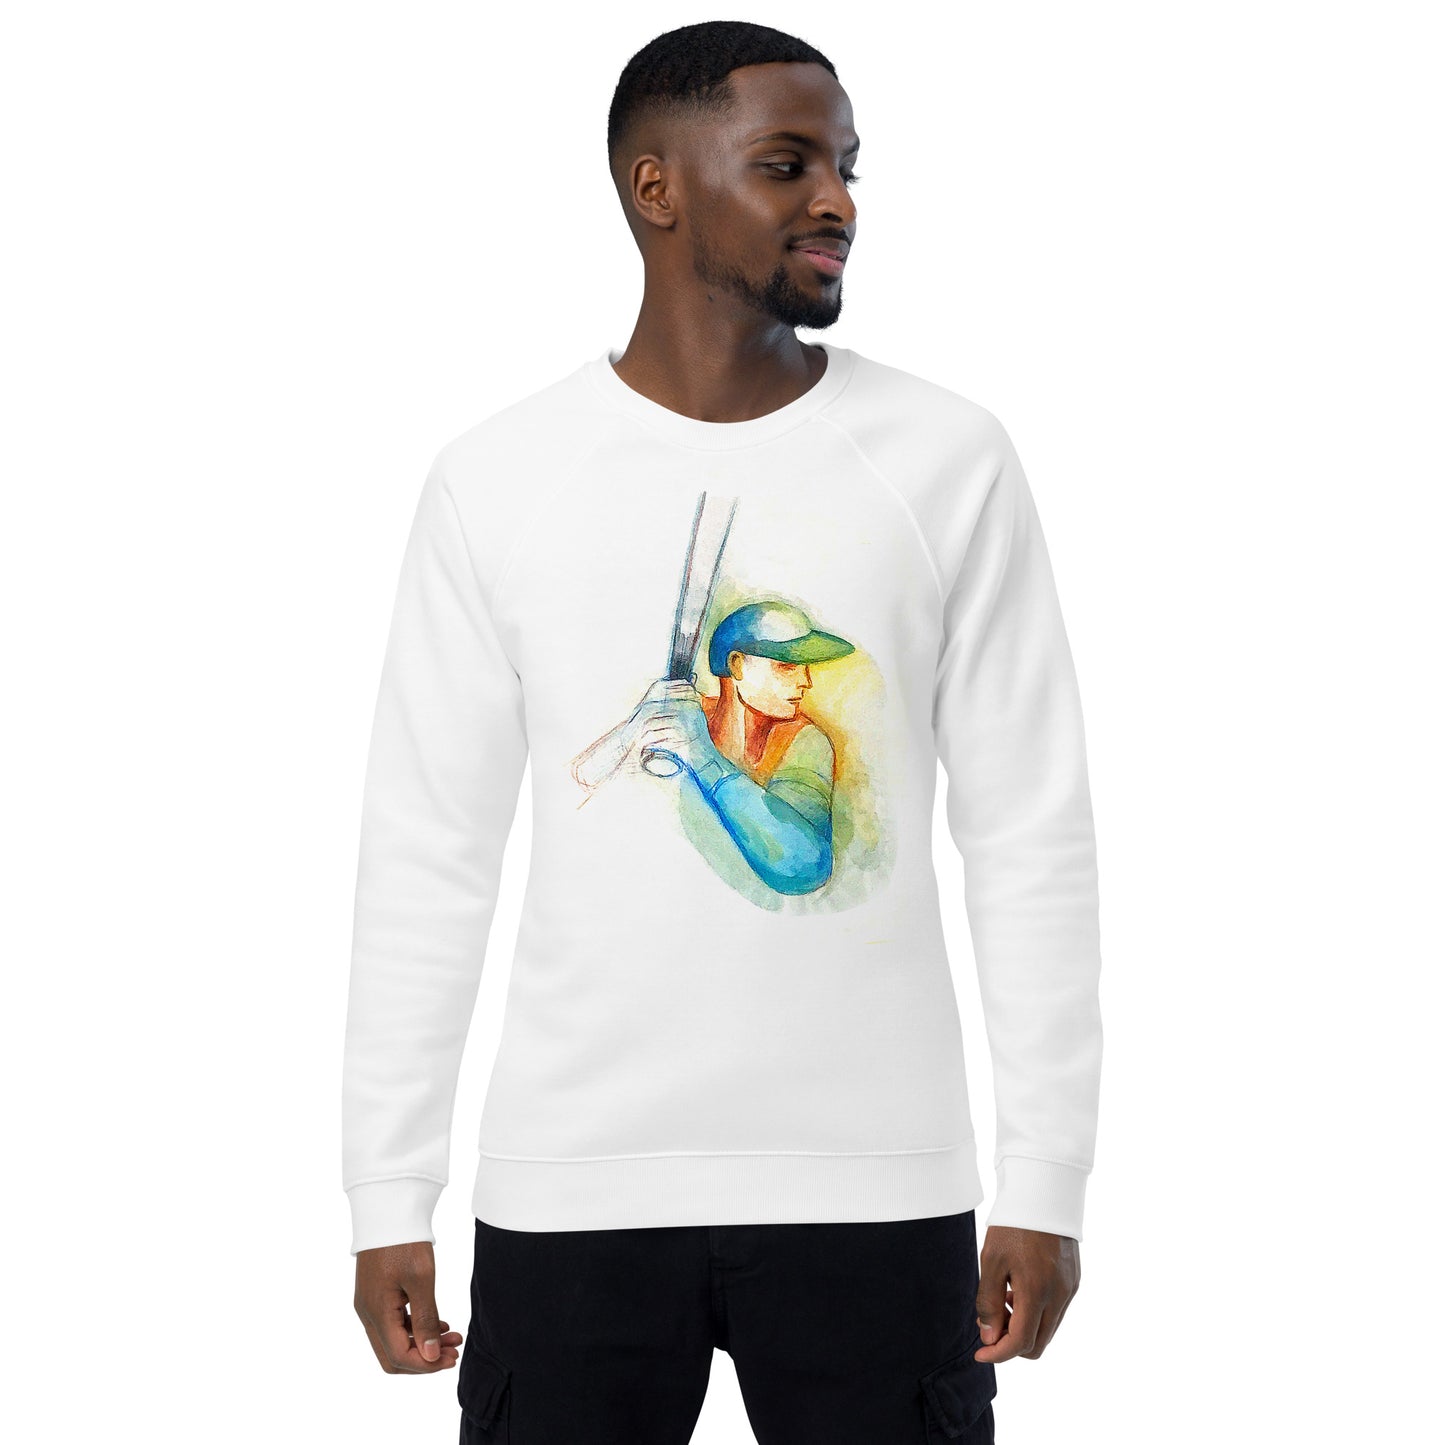 Baseball Player Painting — On Organic Cotton White Raglan Sweatshirt